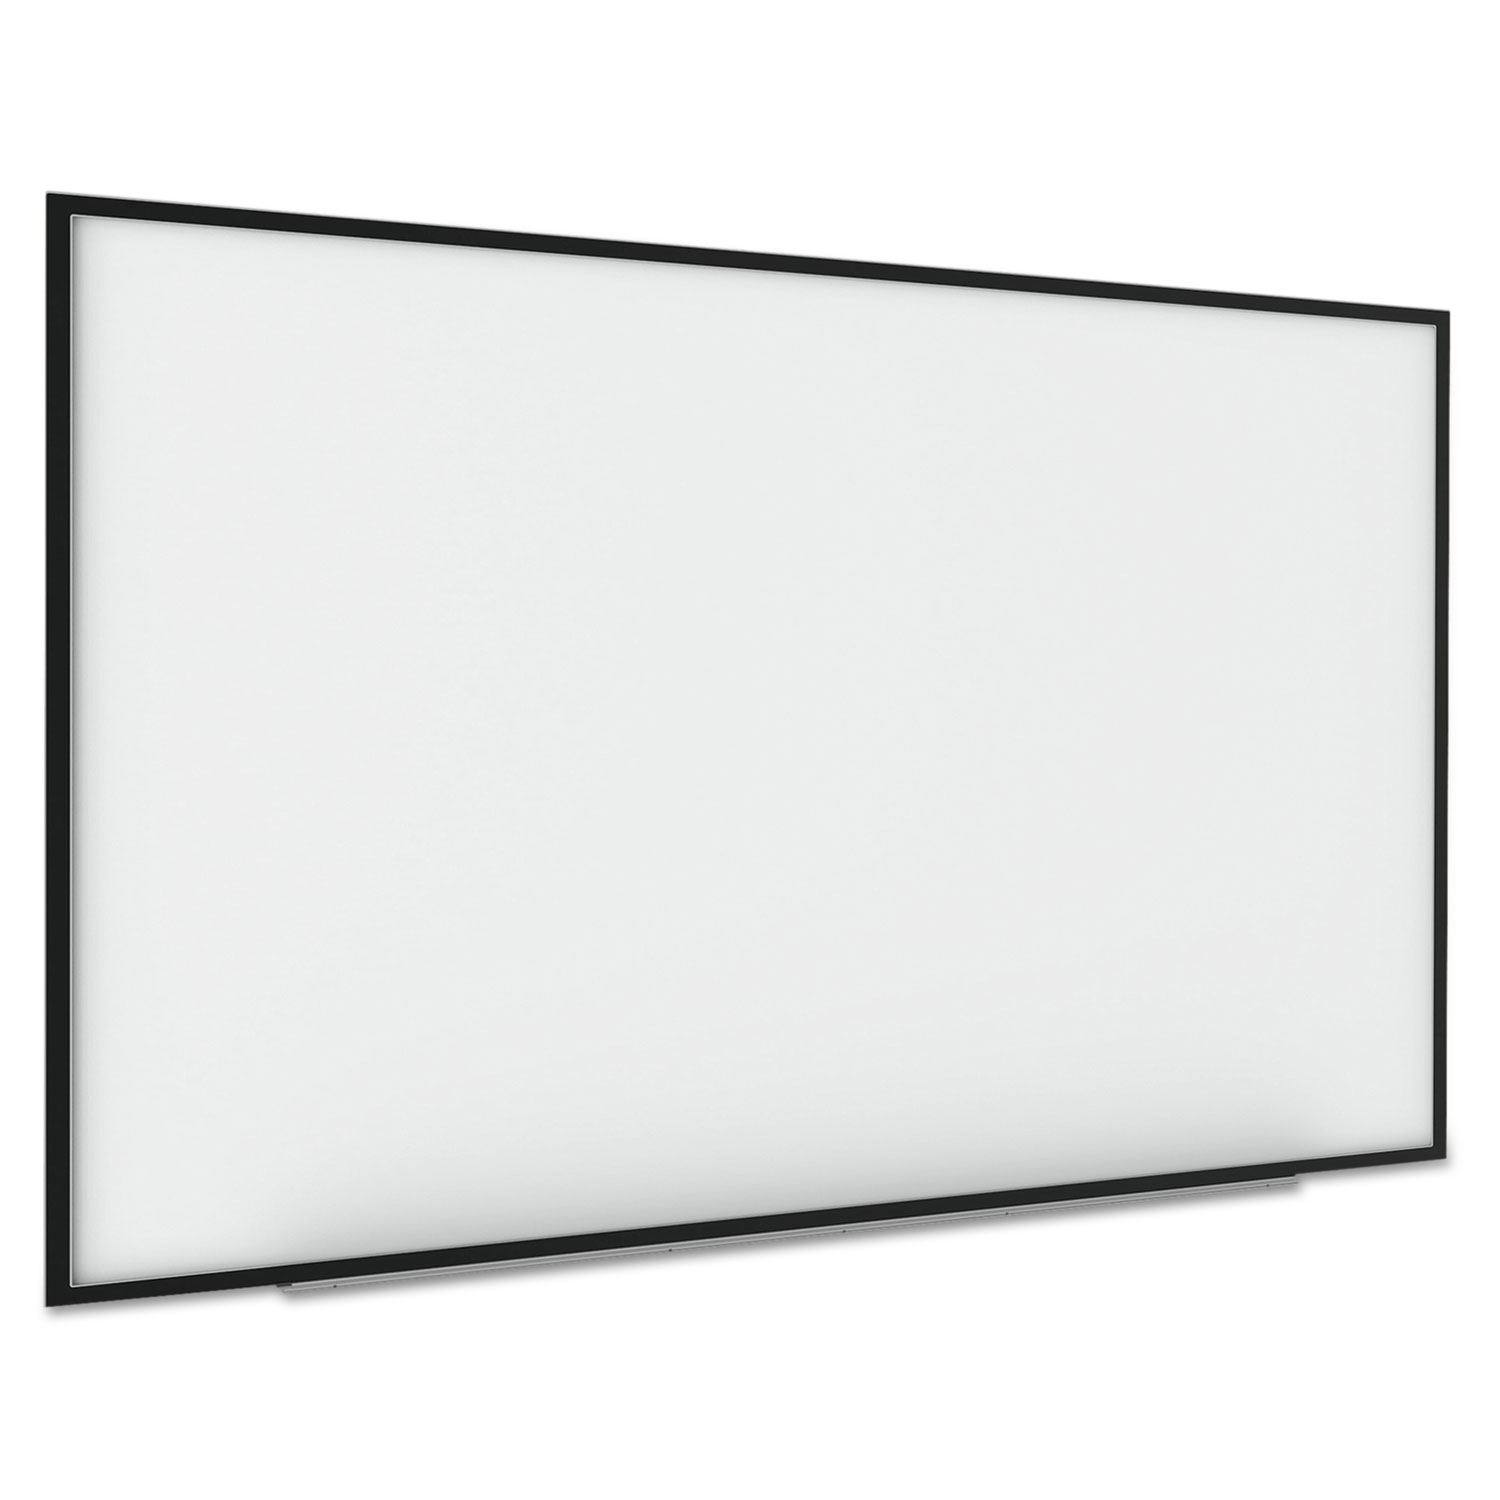  MasterVision BI1291720 Interactive Magnetic Dry Erase Board, 70 x 52 x 1 1/4, White/Black Frame (BVCBI1291720) 